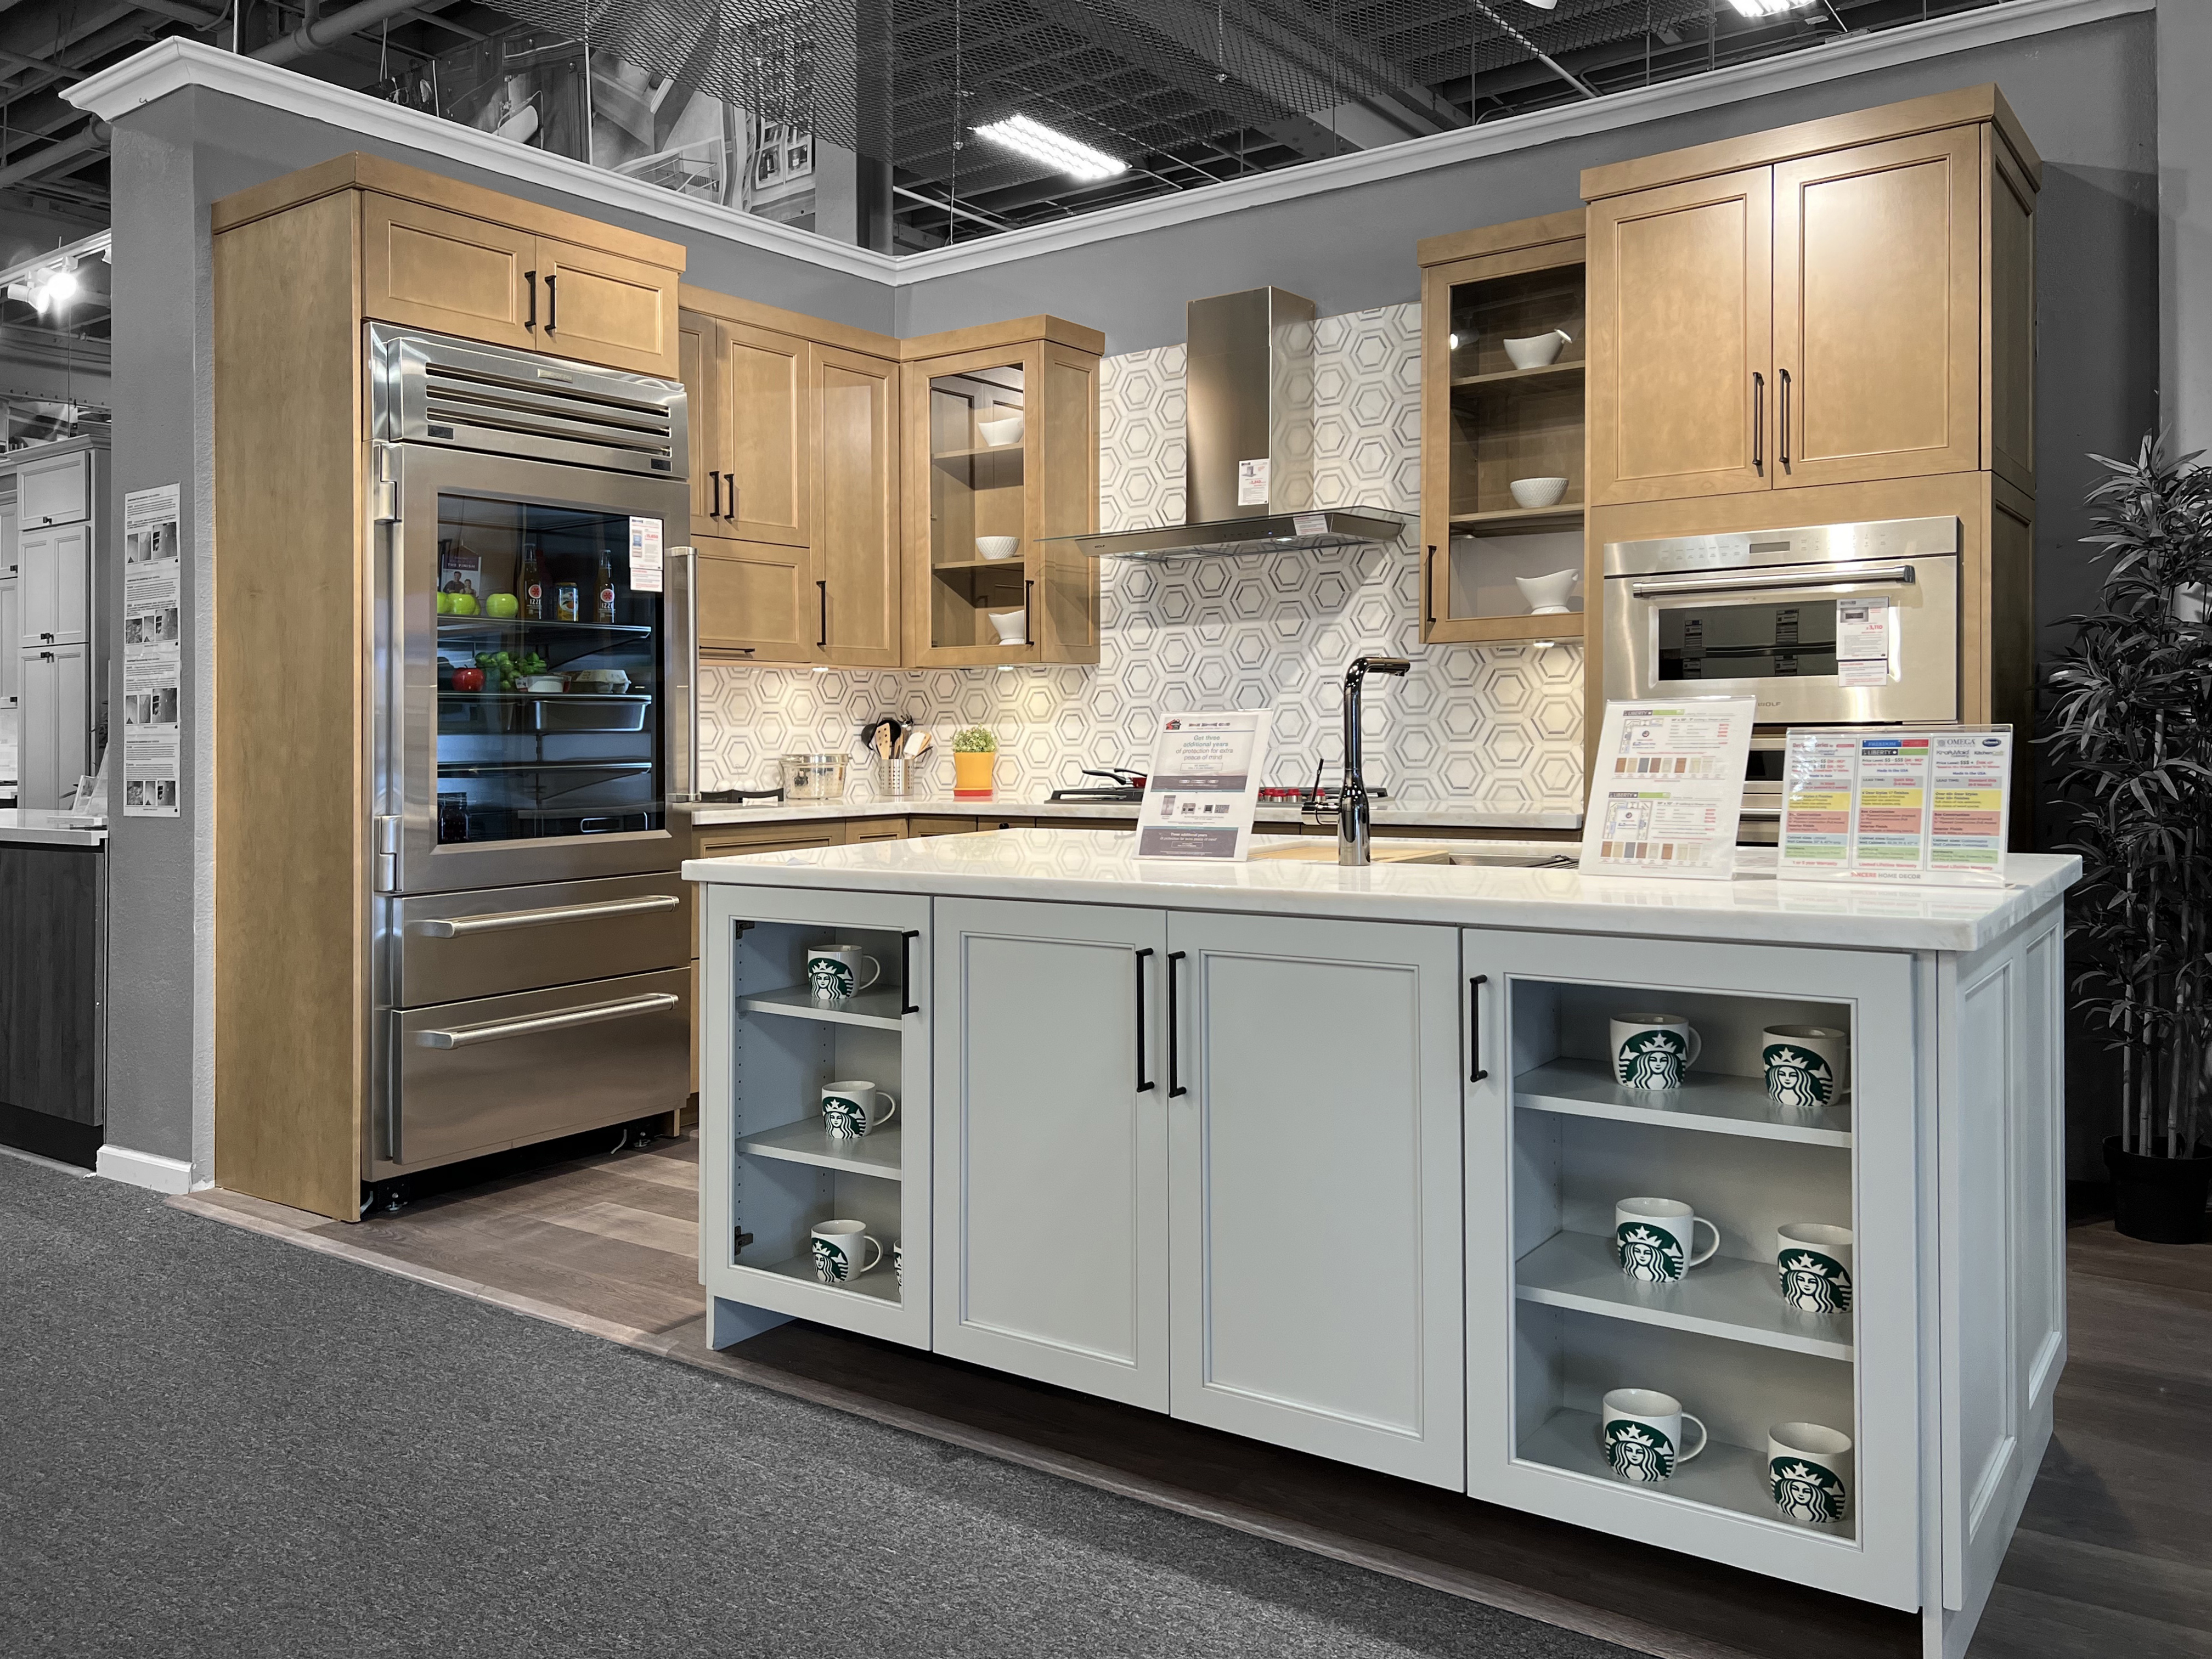 Maple Kitchen Cabinetry And Steel Appliances Kitchen Interior